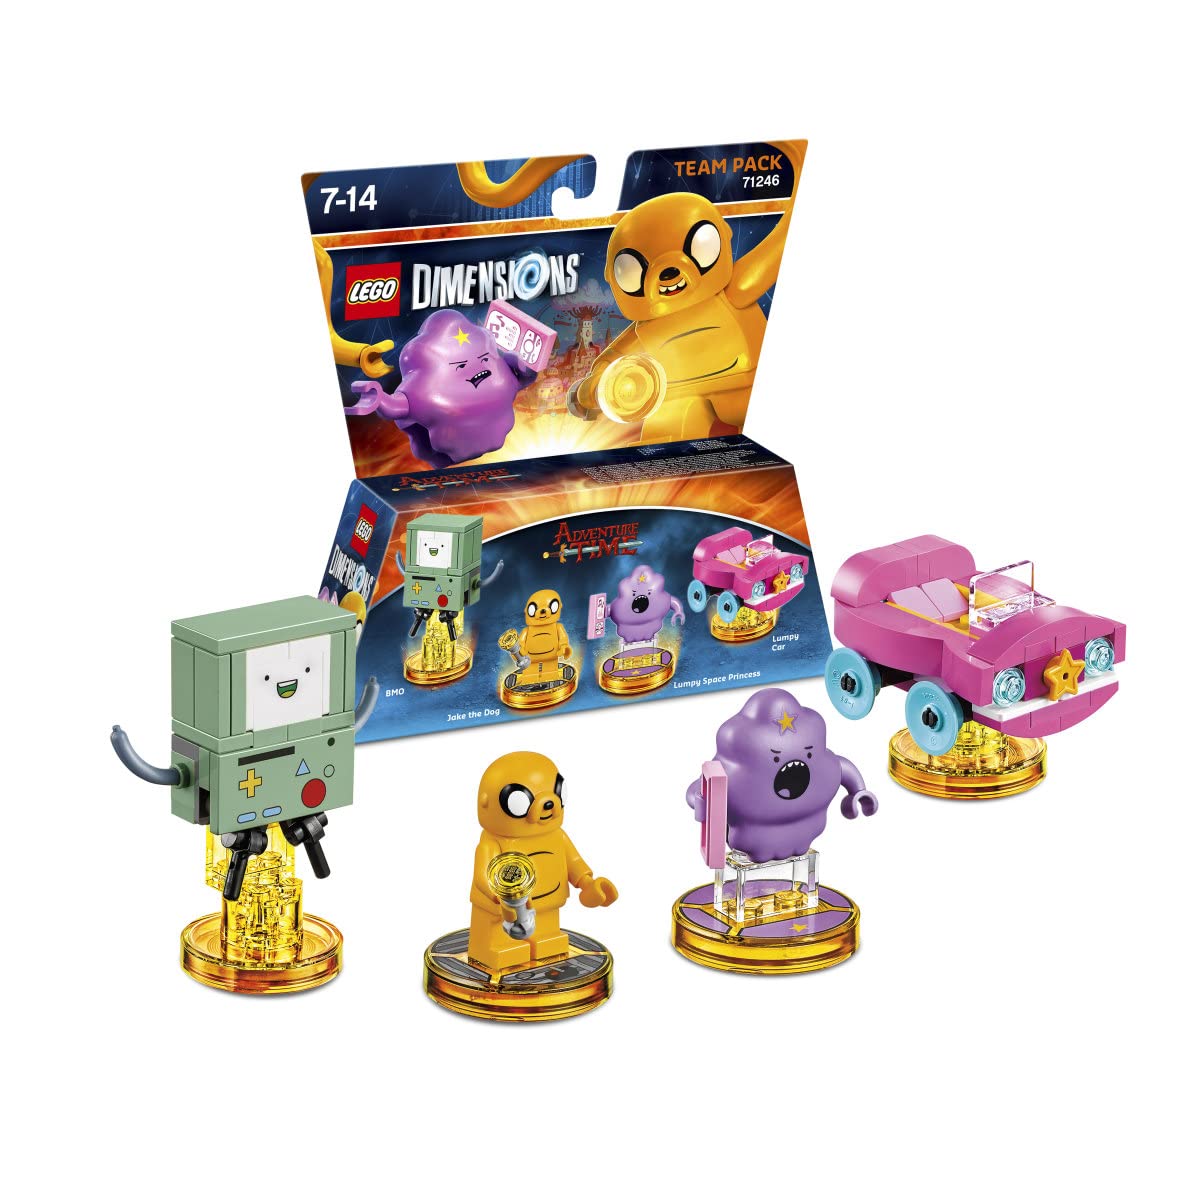 LEGO Dimensions -Team Pack (71246) - Adventure Time (Jake the Dog, BMO, Lumpy Space Princess, Lumpys Car)